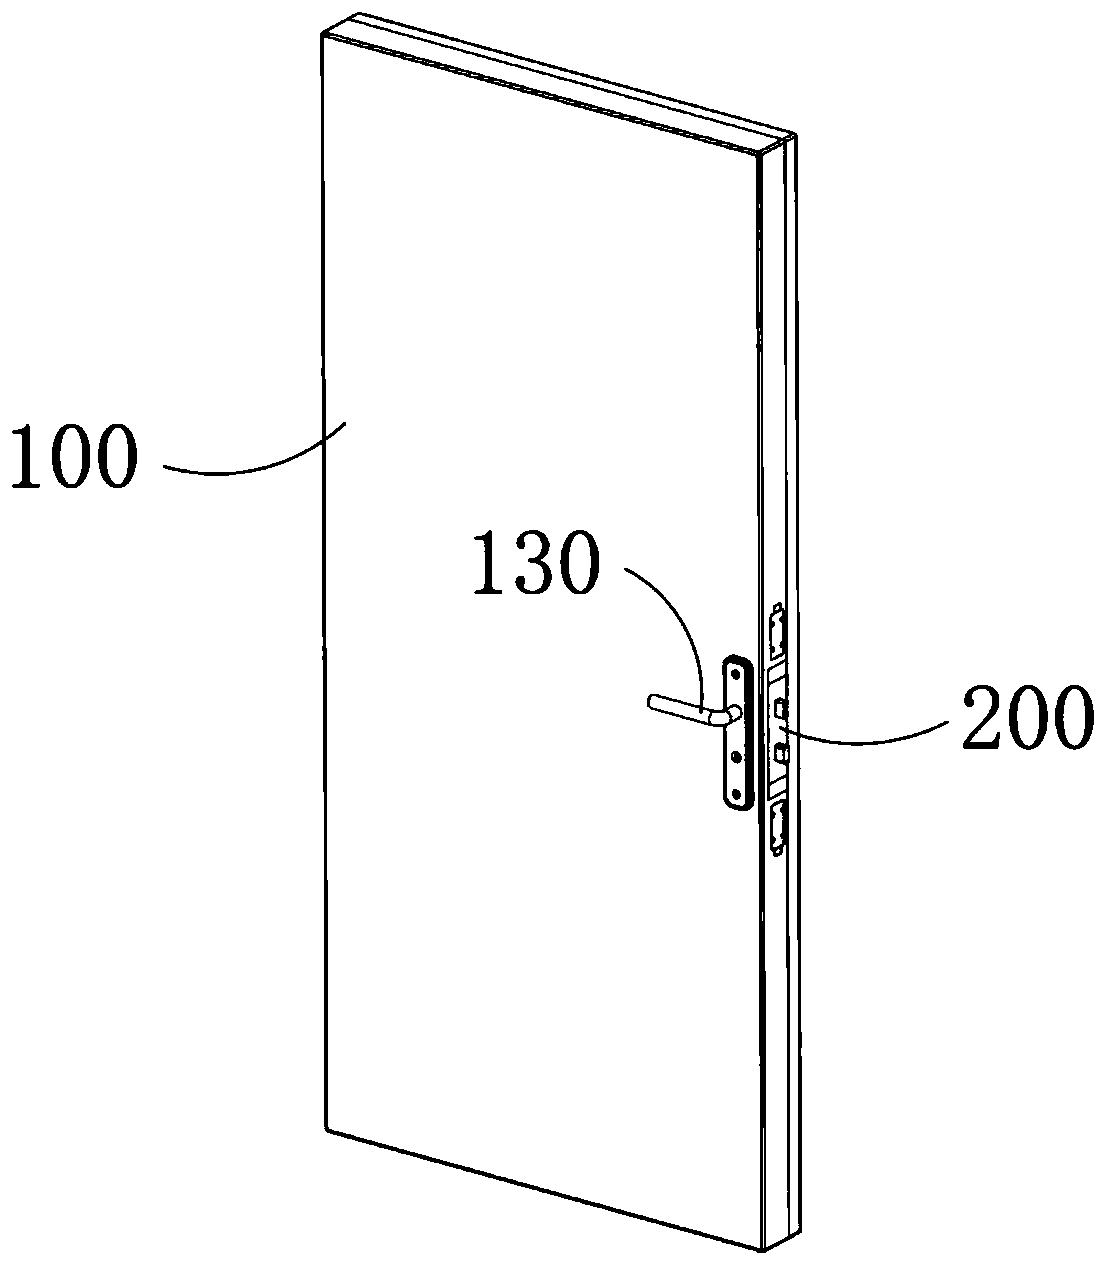 High-level anti-theft control method of intelligent anti-theft door